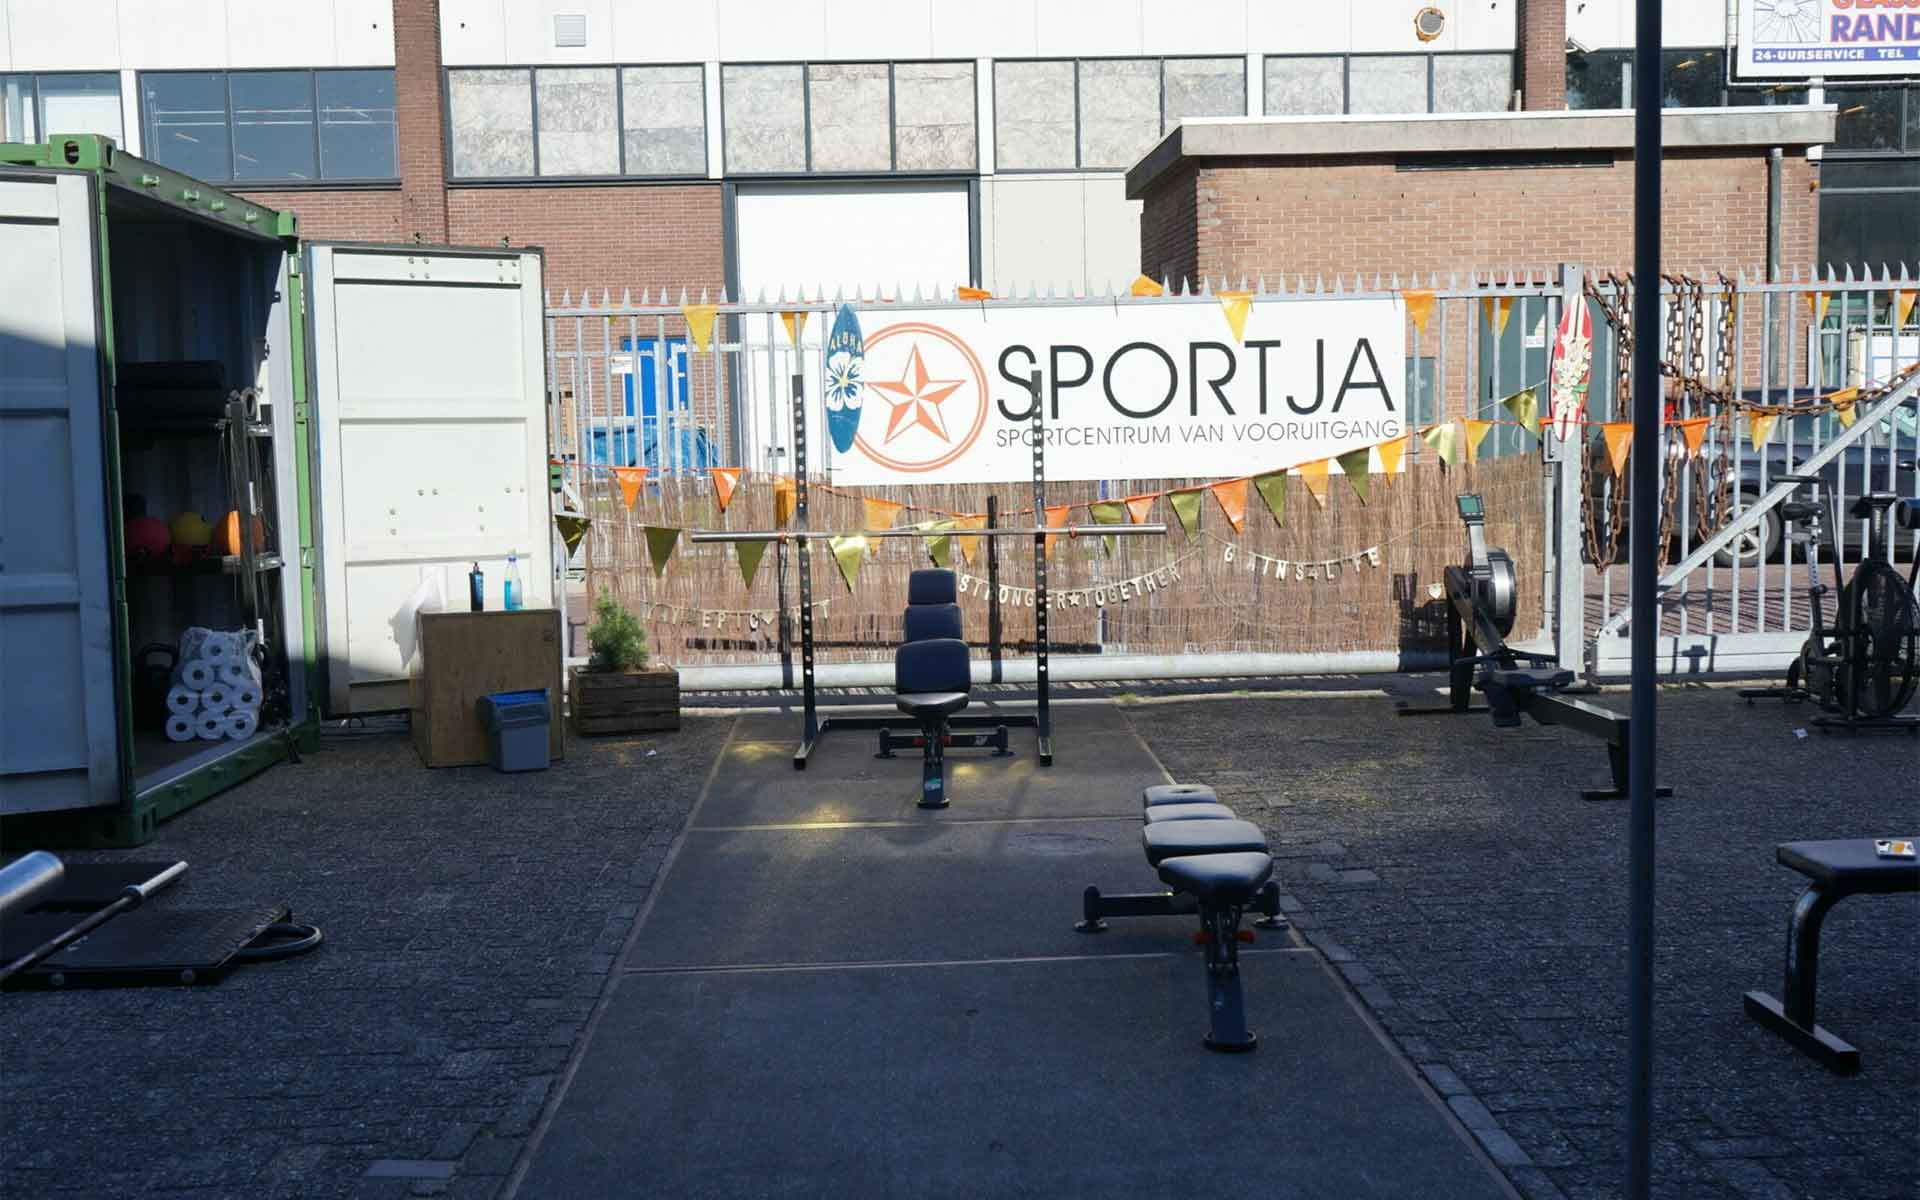 SPORTJA – Sportcentrum van vooruitgang